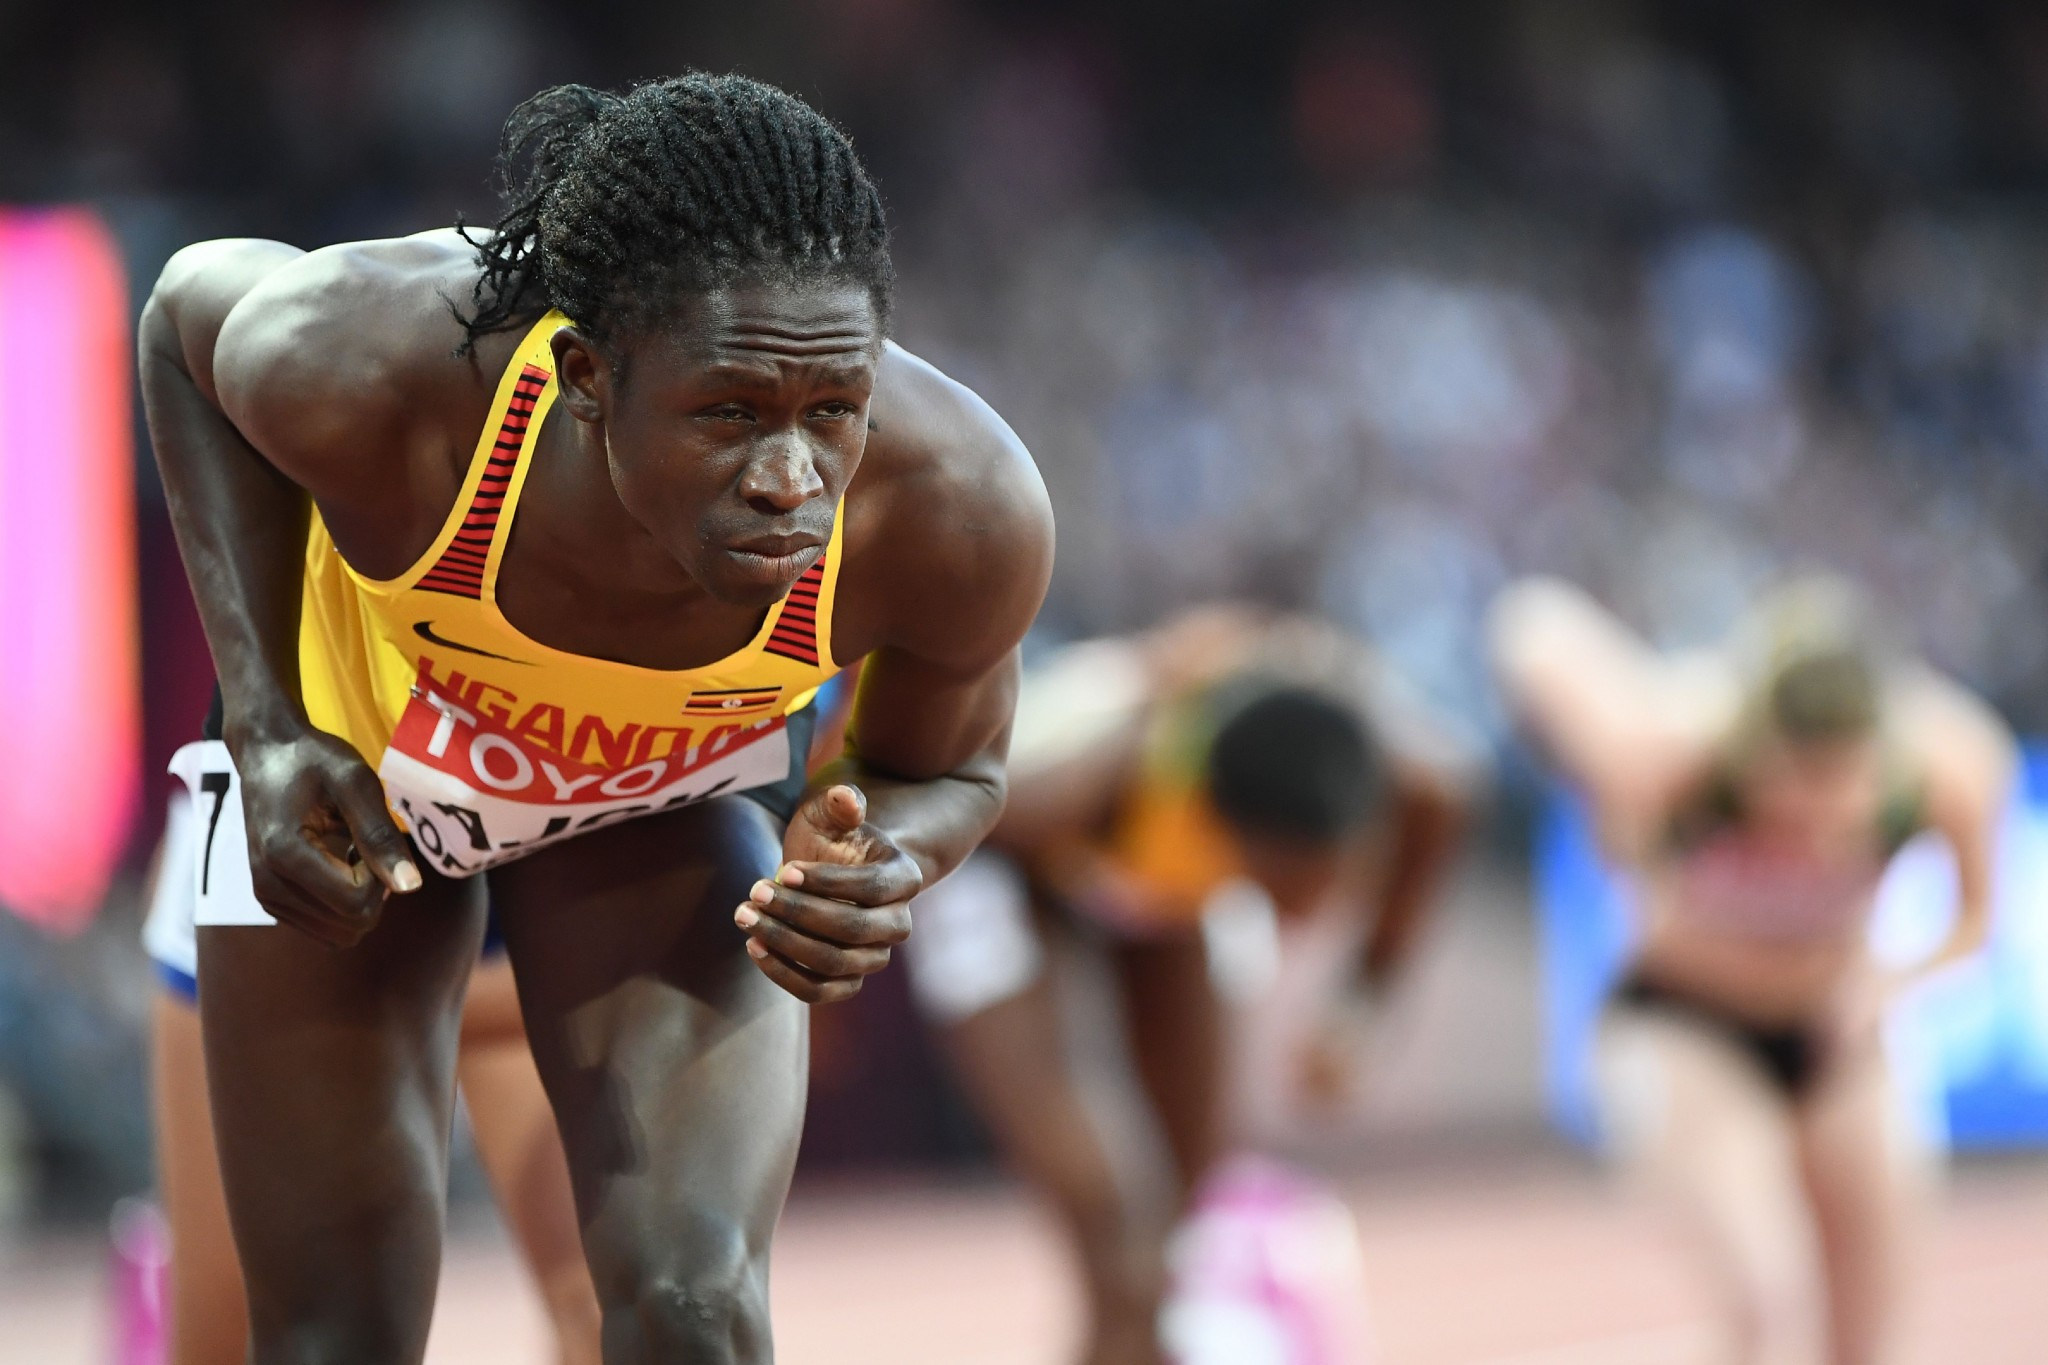 Uganda to compete at Taipei 2017 despite Government's One China policy